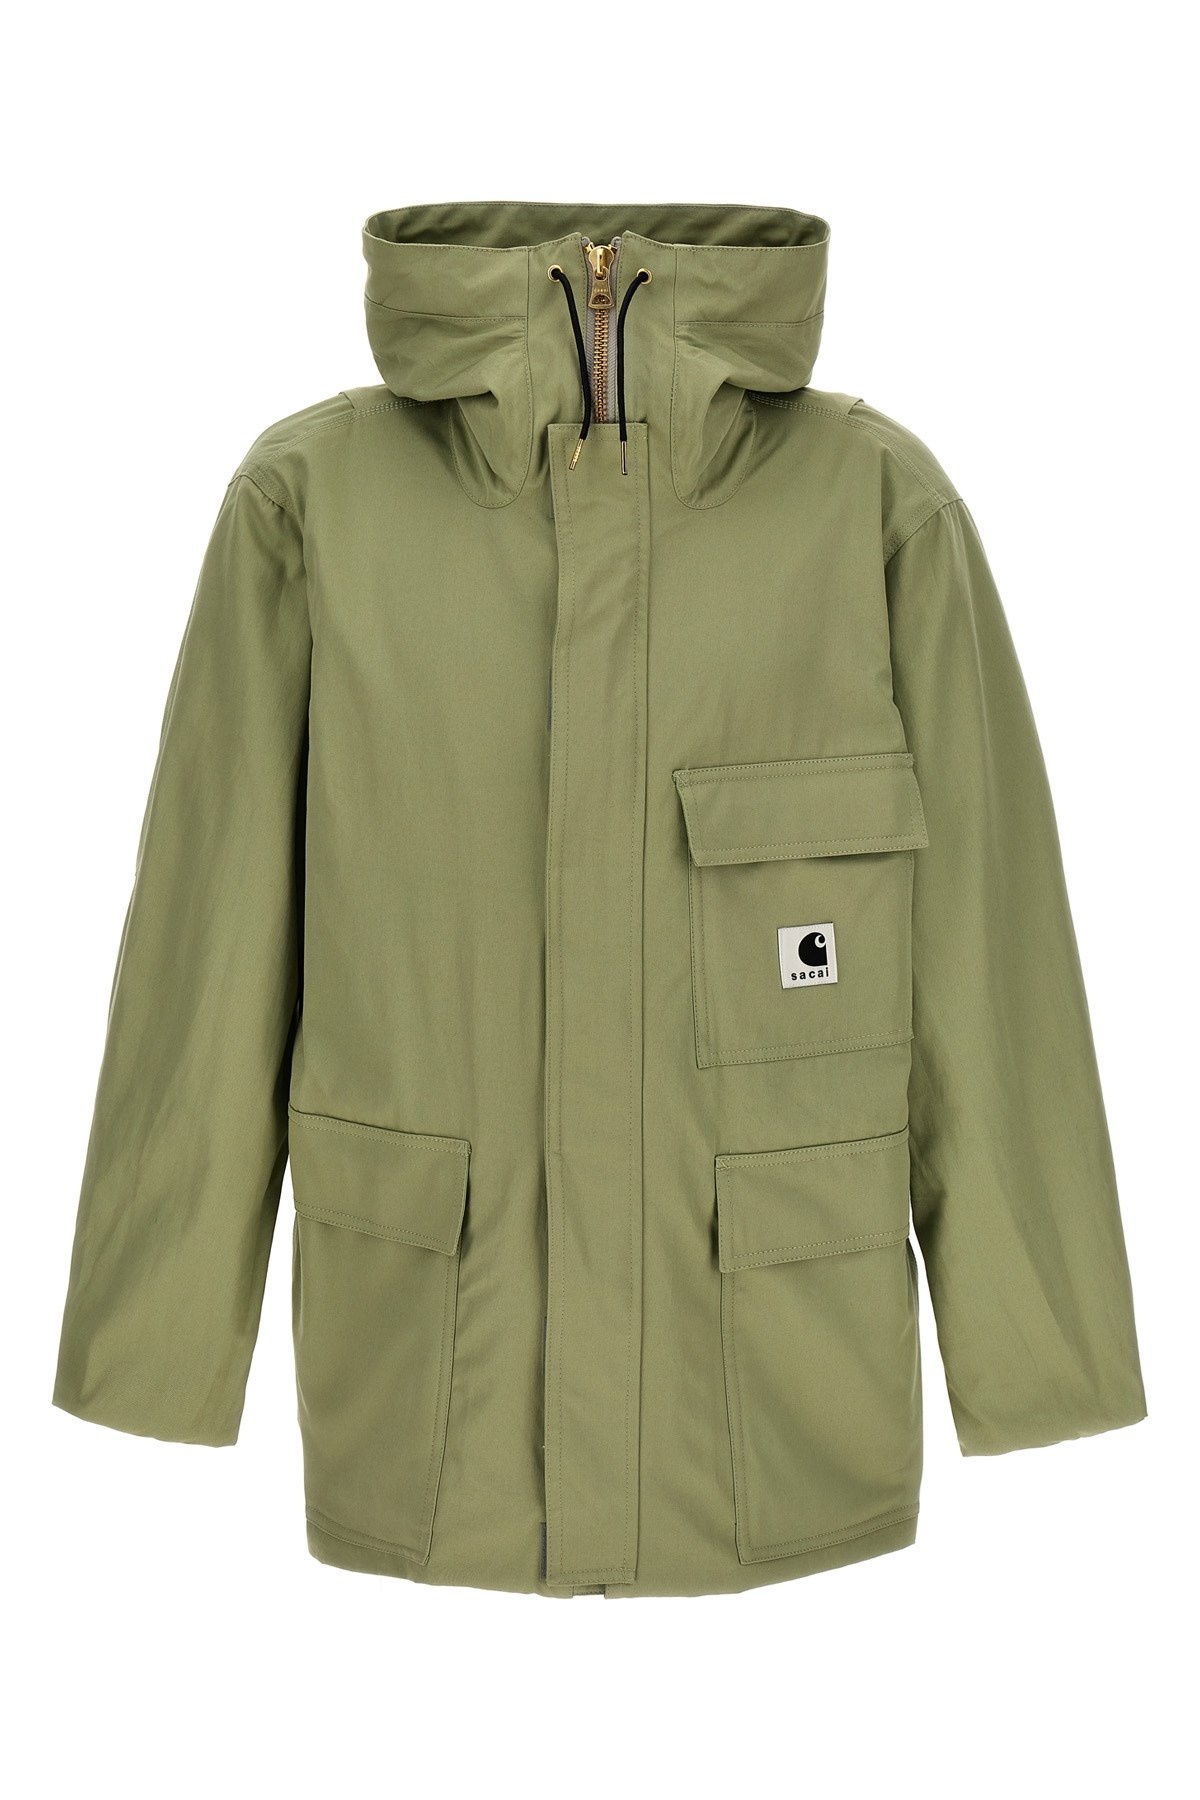 Sacai x Carhartt WIP reversible jacket - 2